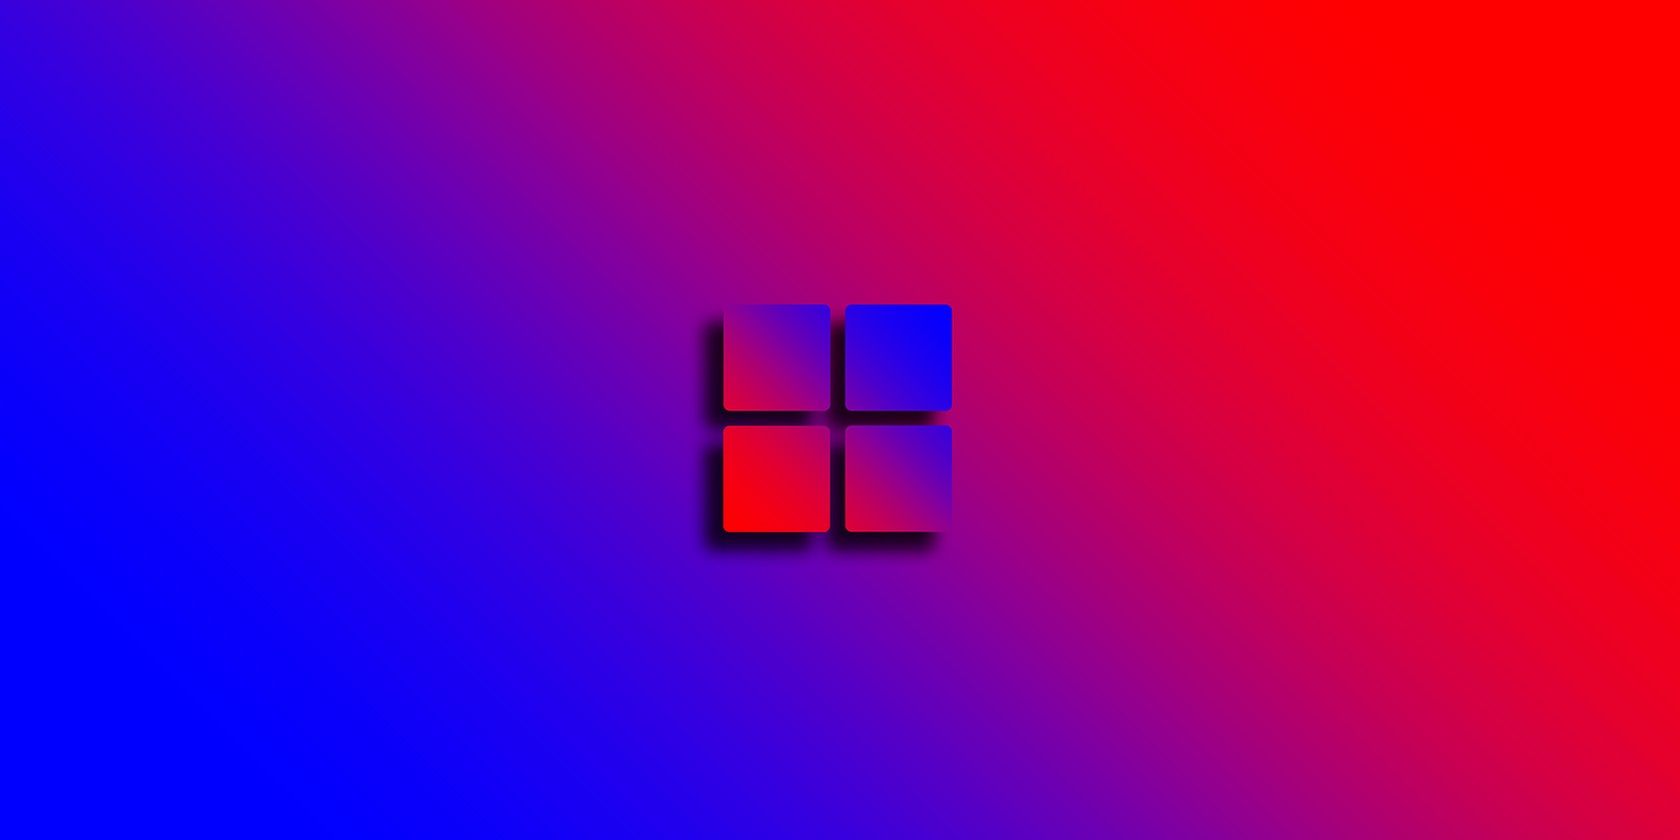 The Windows 11 logo image